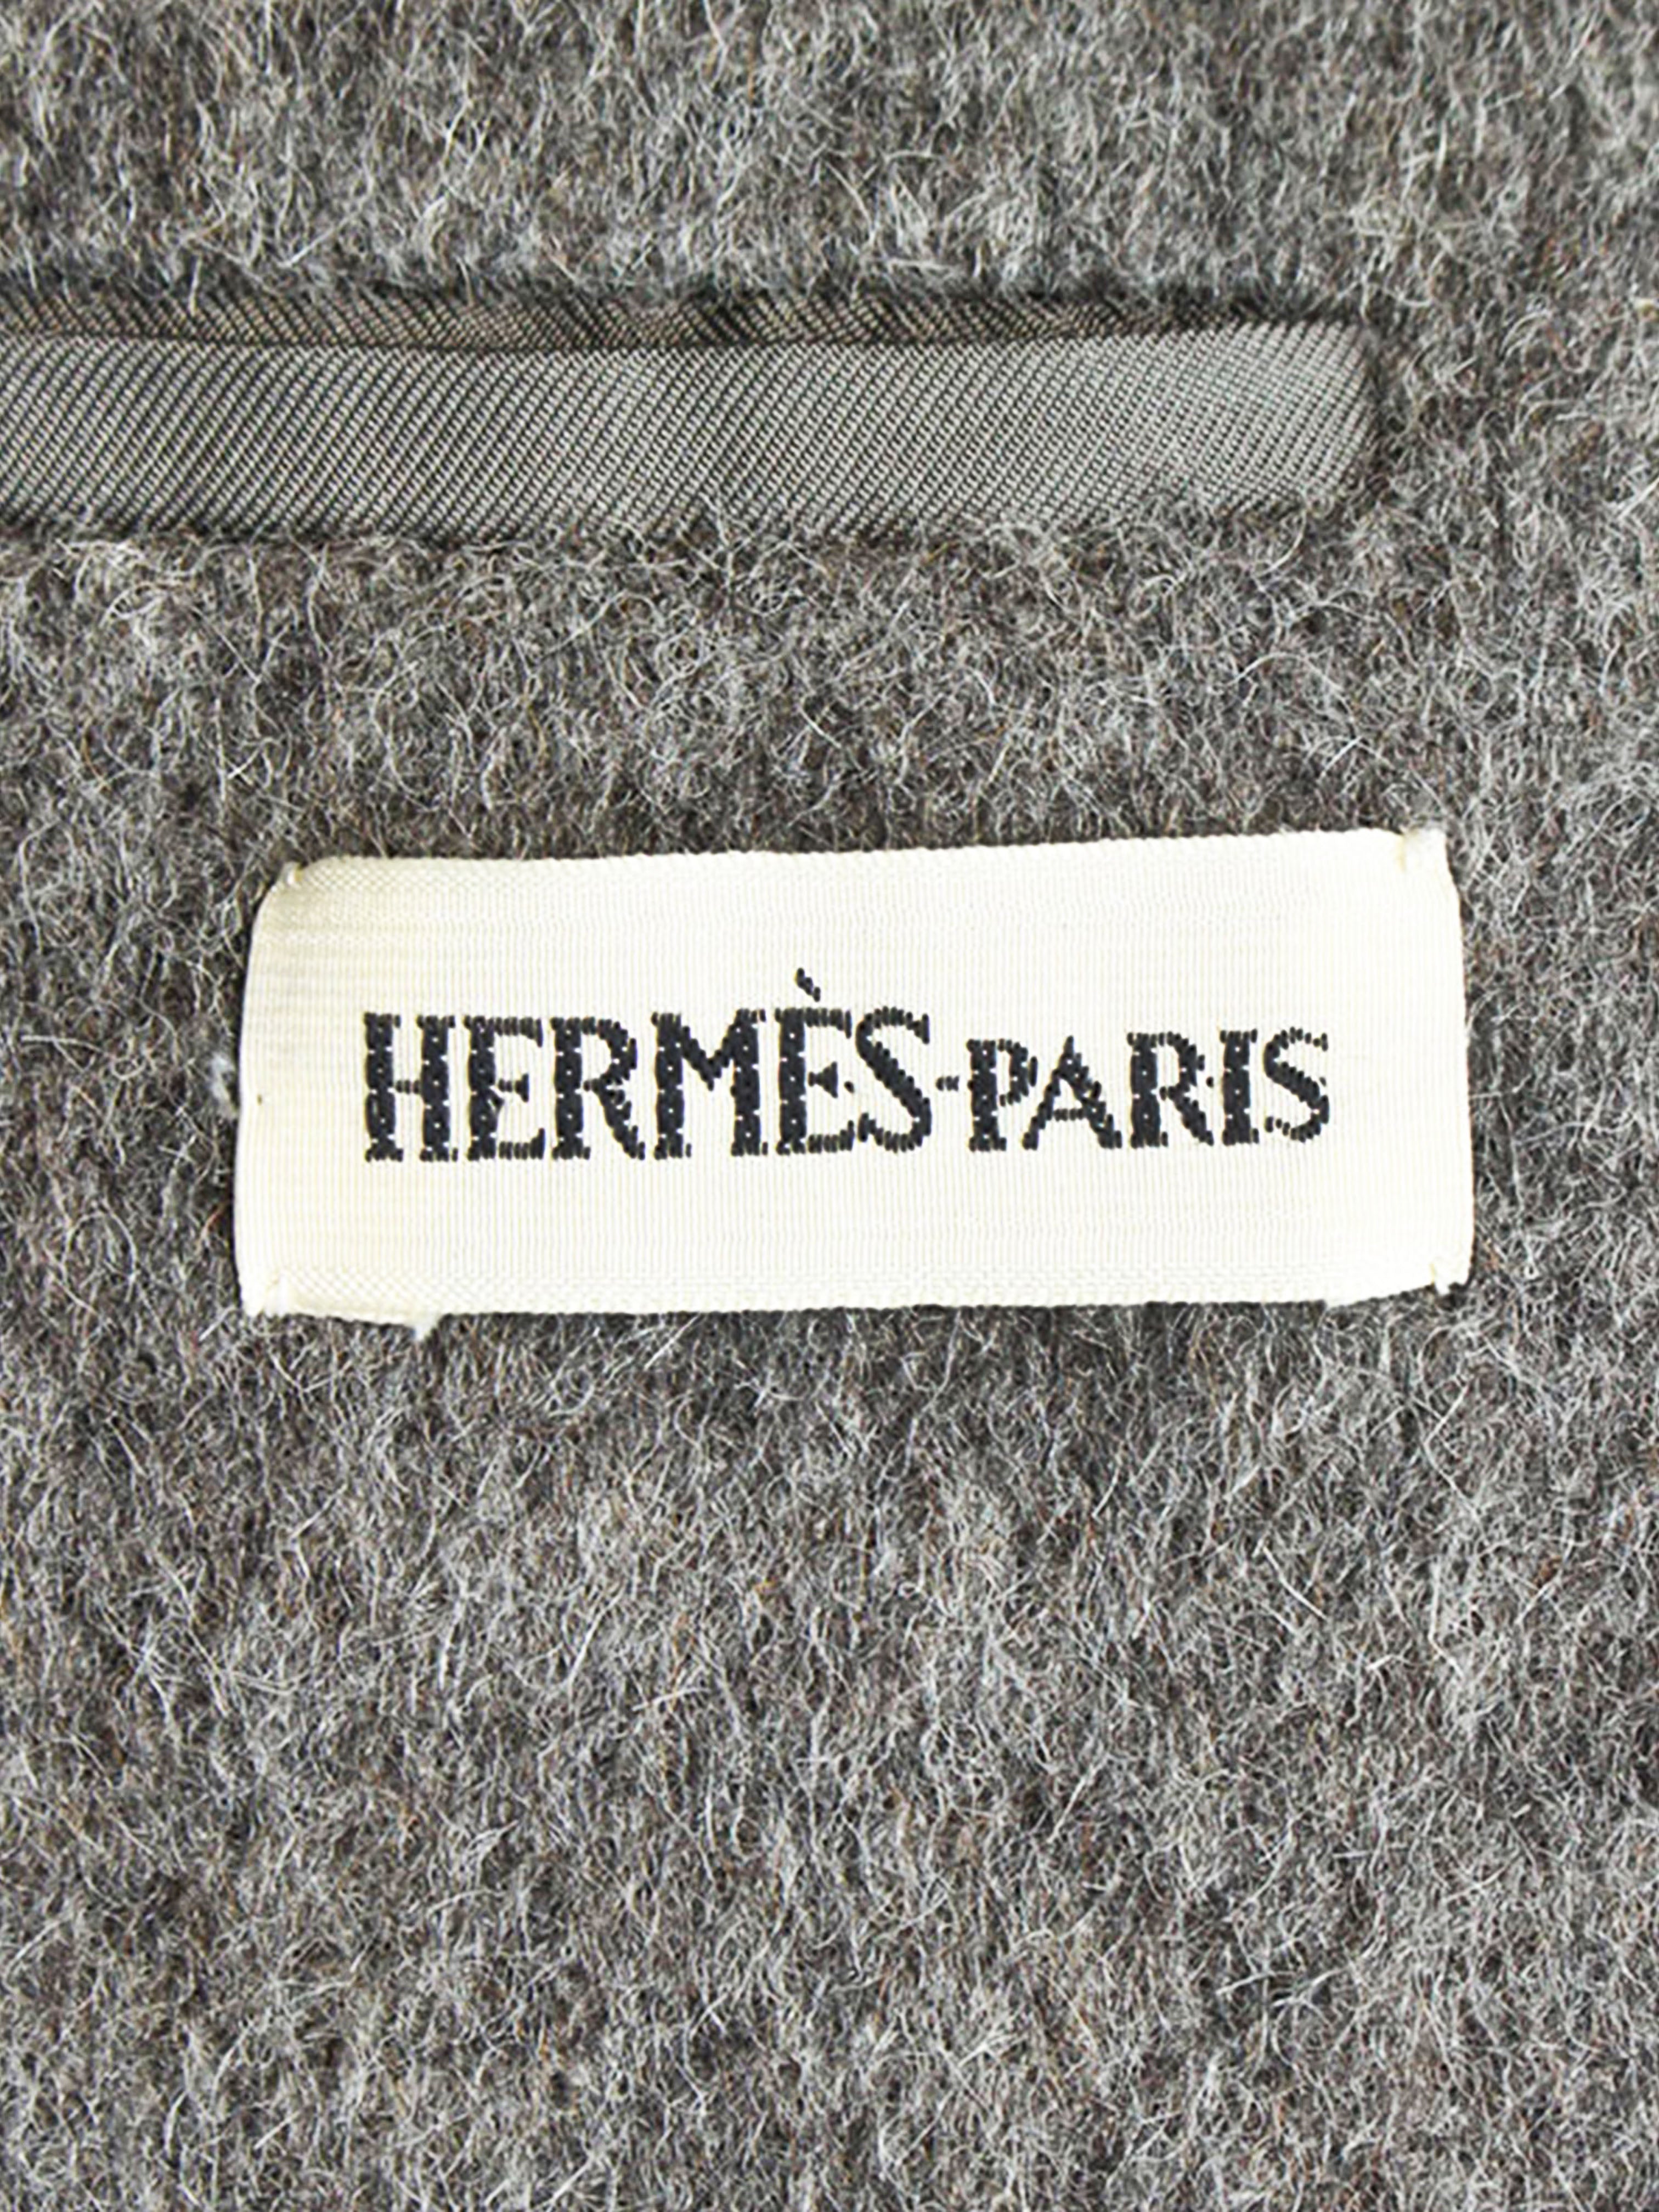 Hermès by Martin Margiela 2002 Gray Alpaca Coat